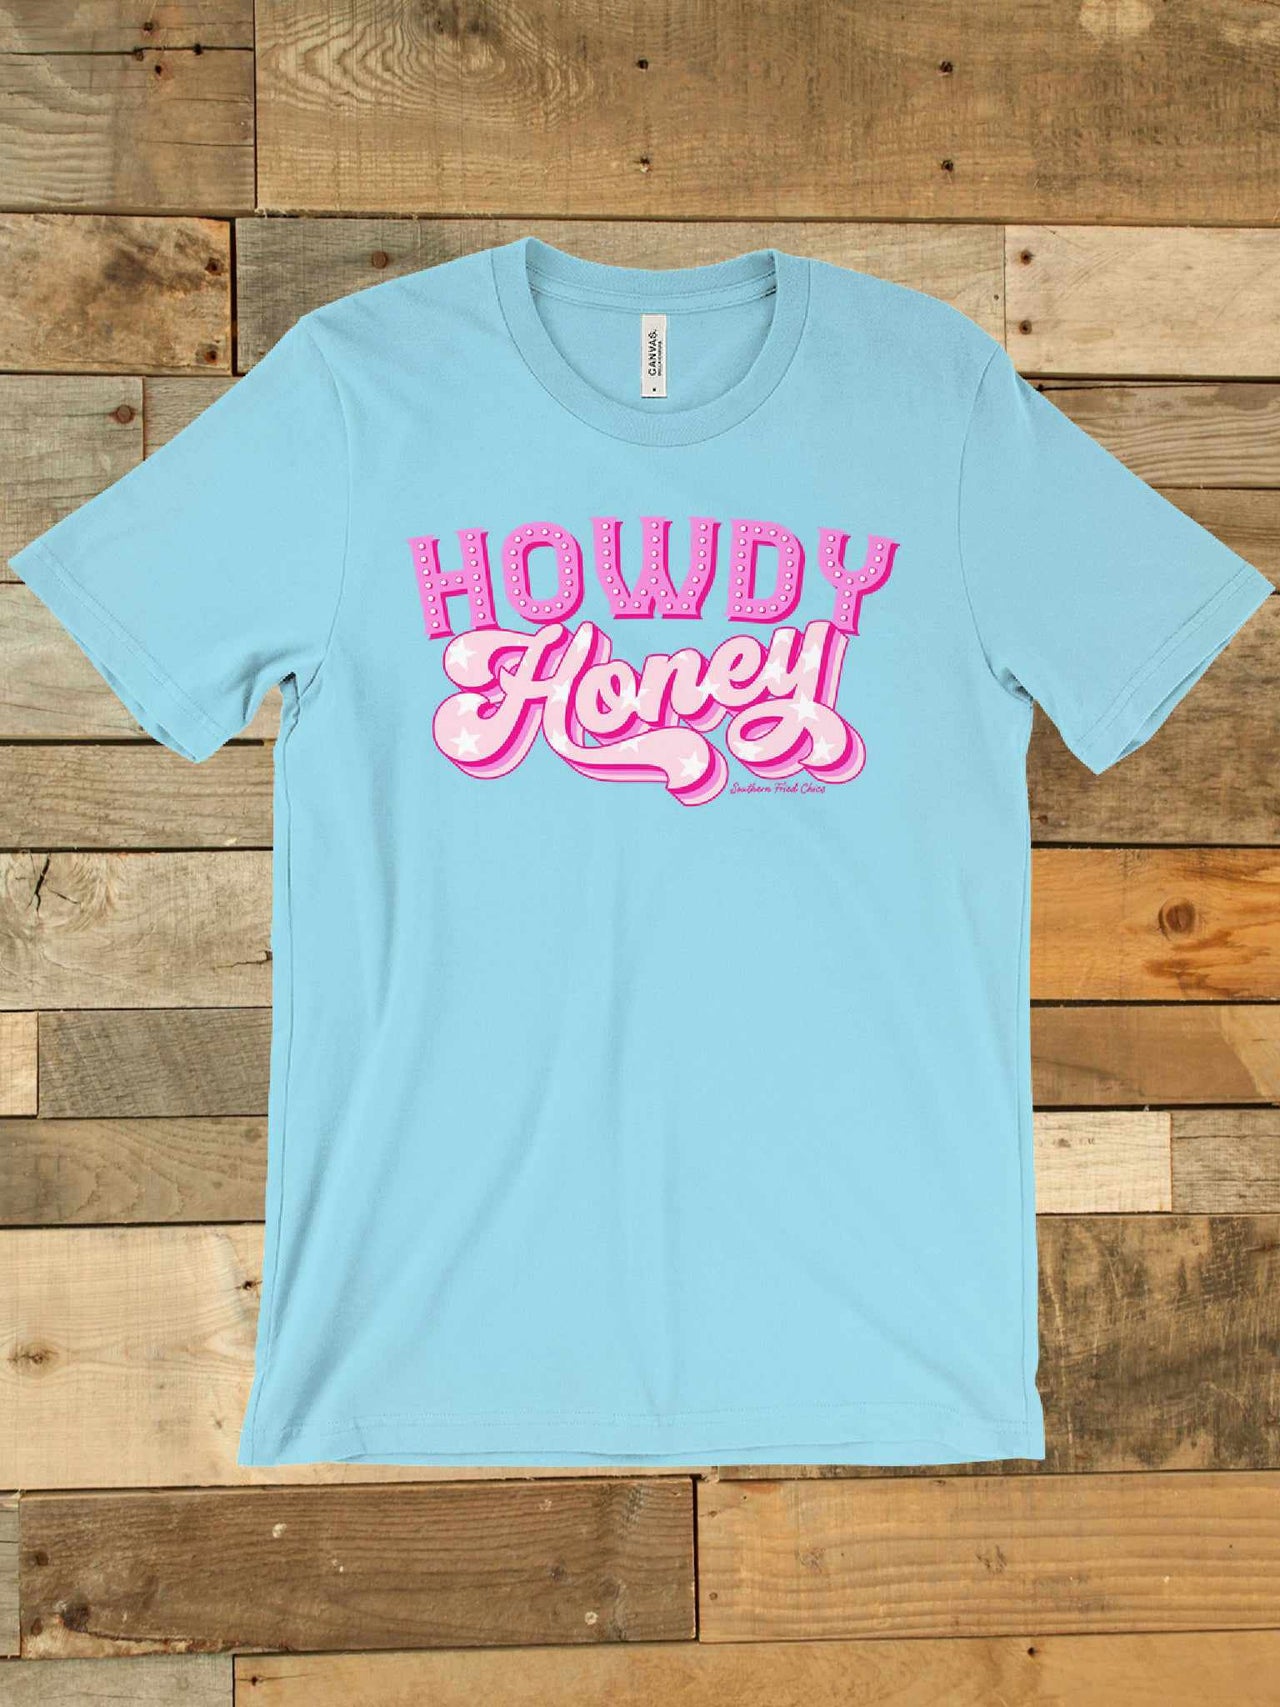 Blue "howdy honey" graphic t-shirt for women.